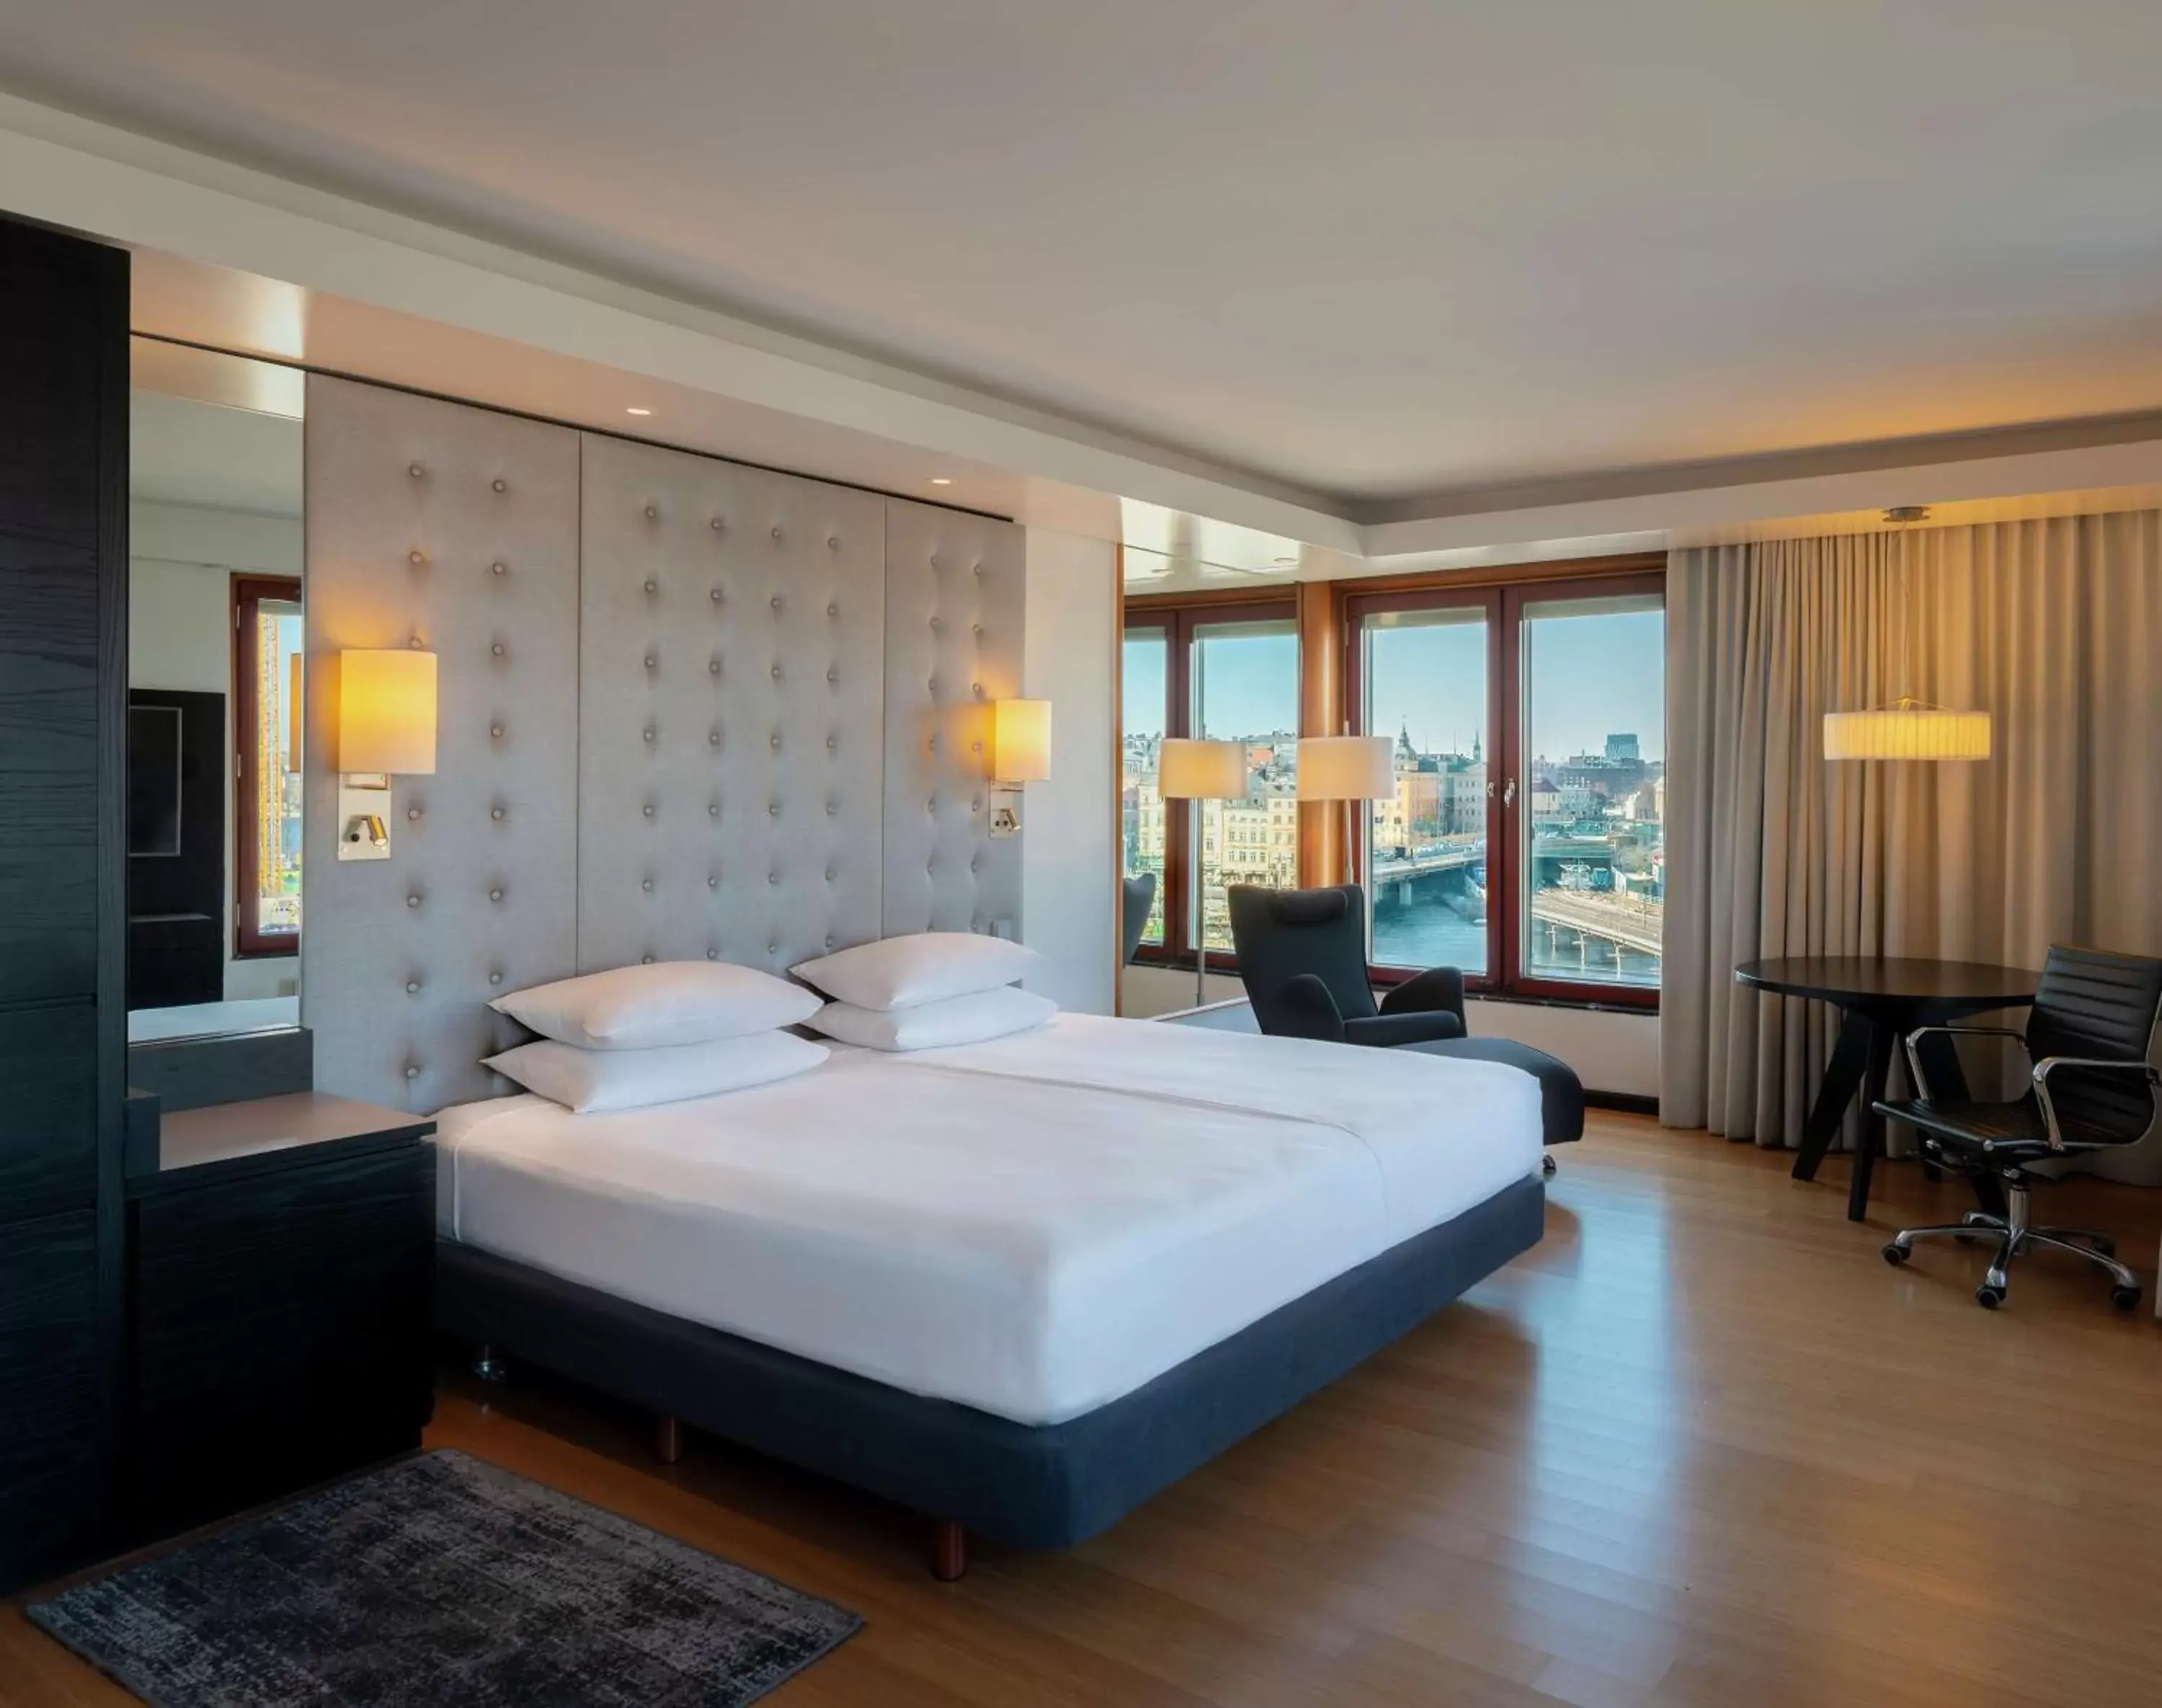 Bedroom in Hilton Stockholm Slussen Hotel